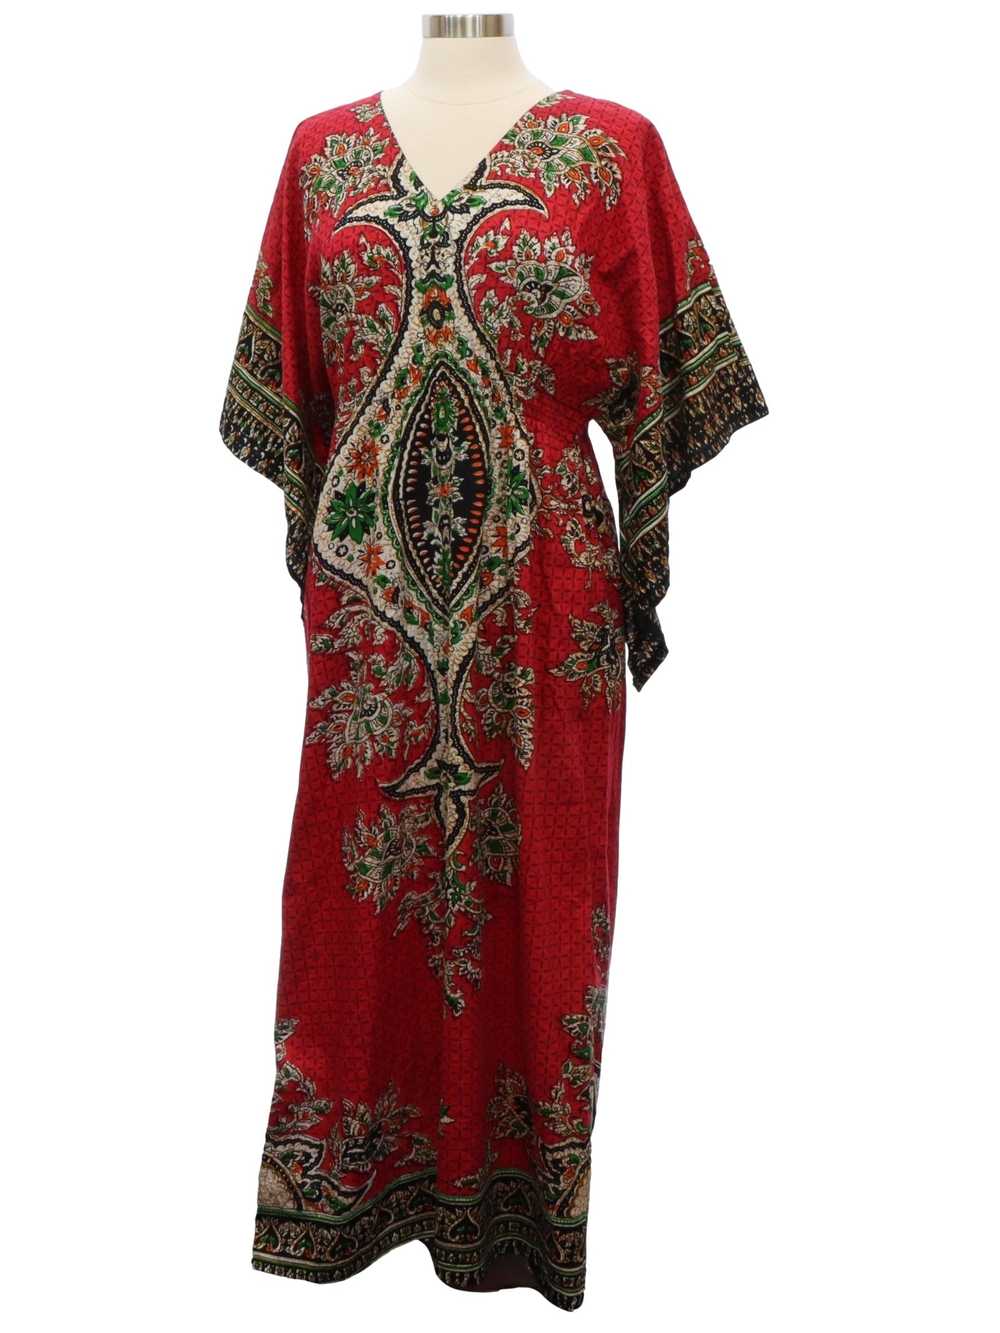 1980's Dashiki Dress - image 1